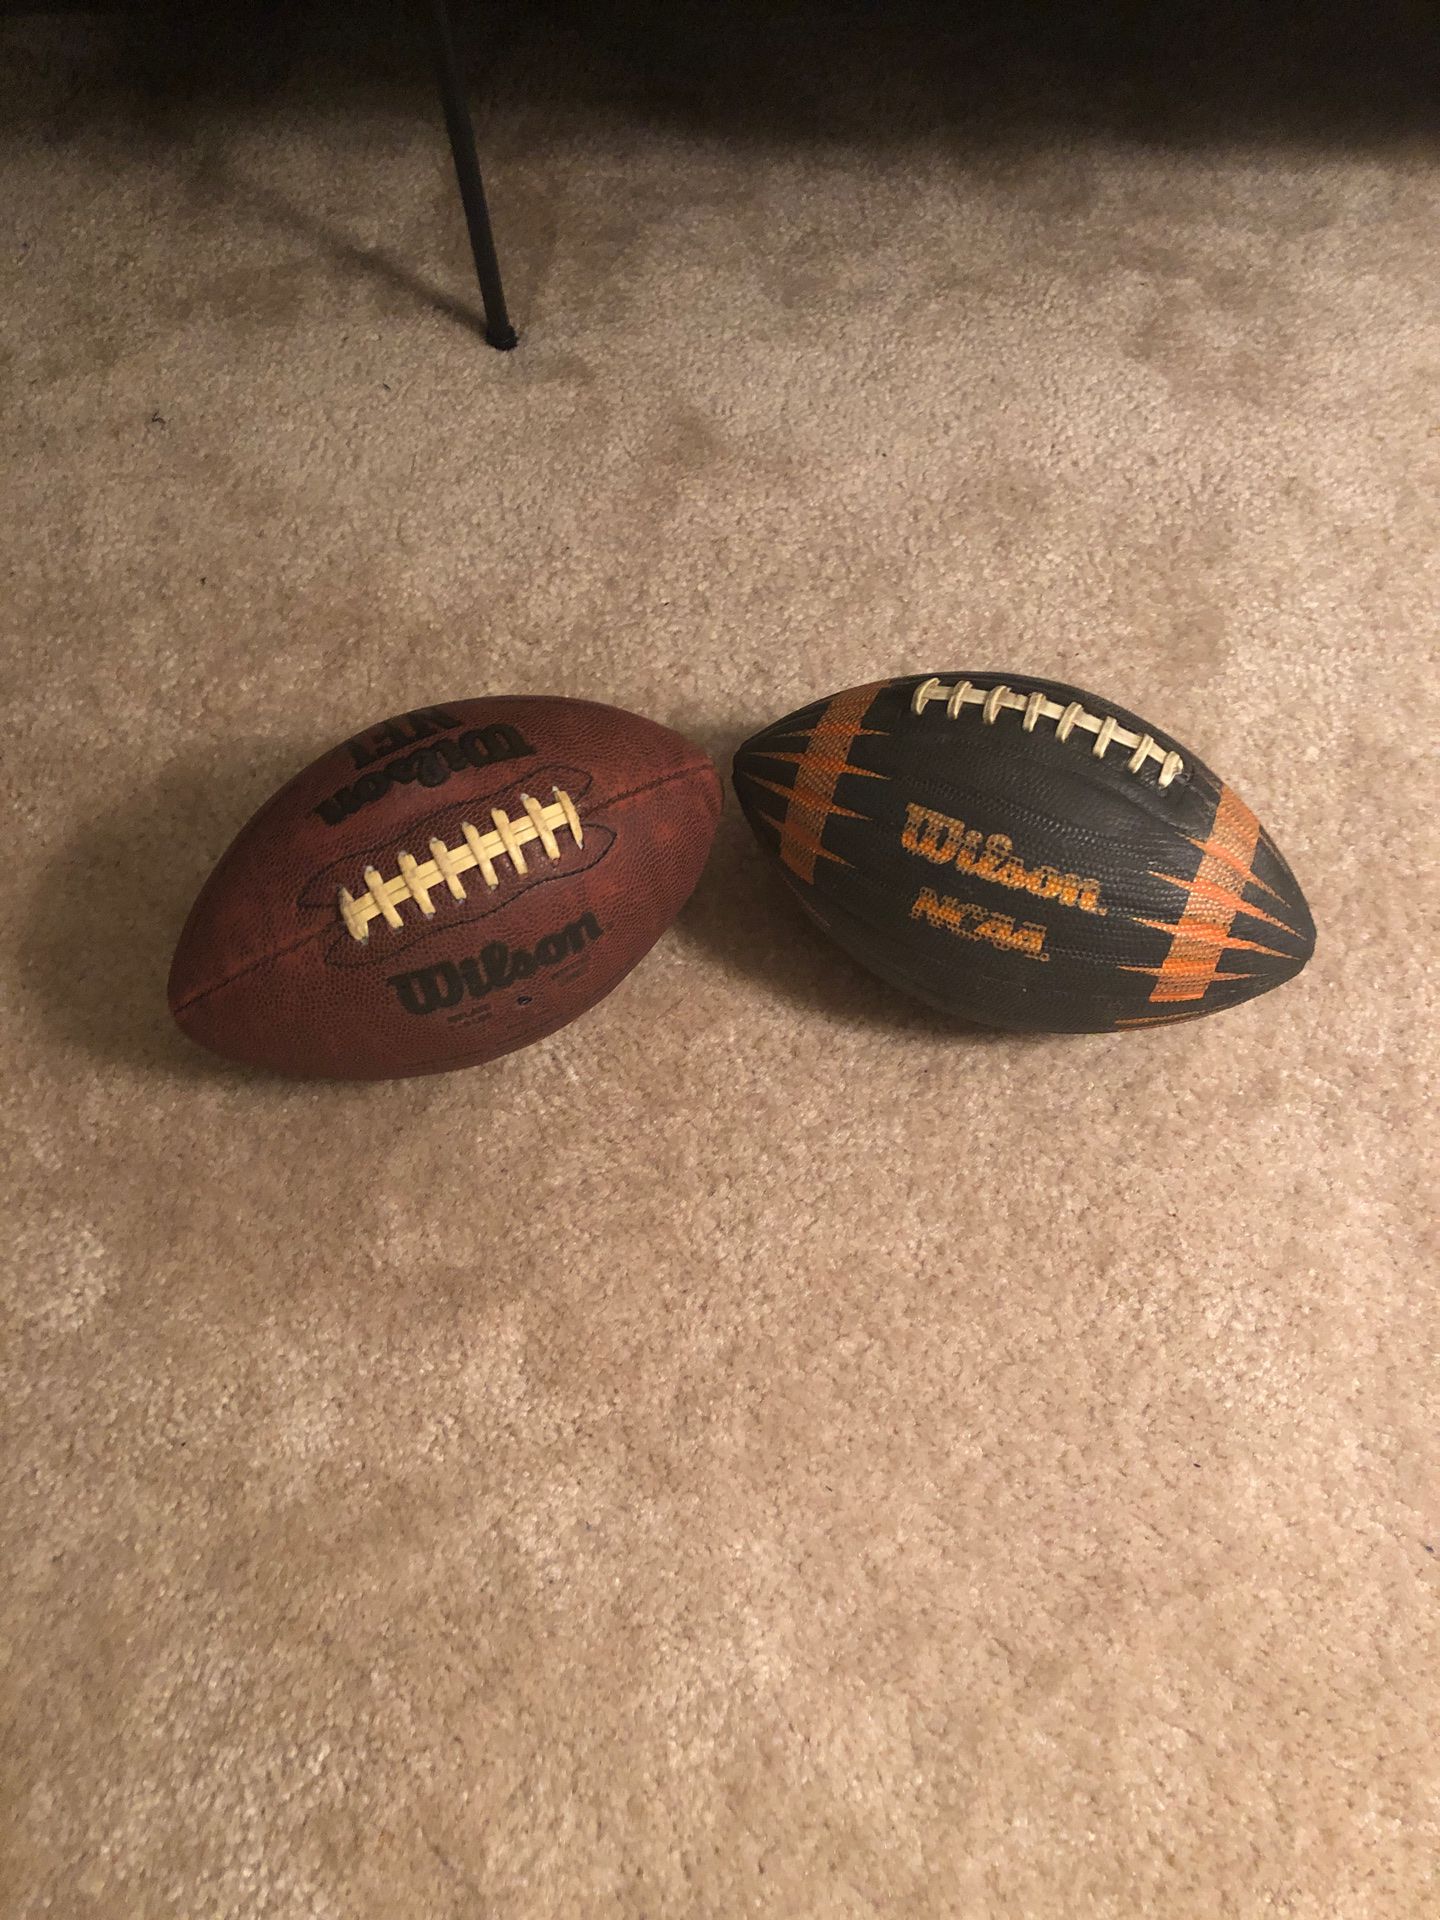 Old footballs